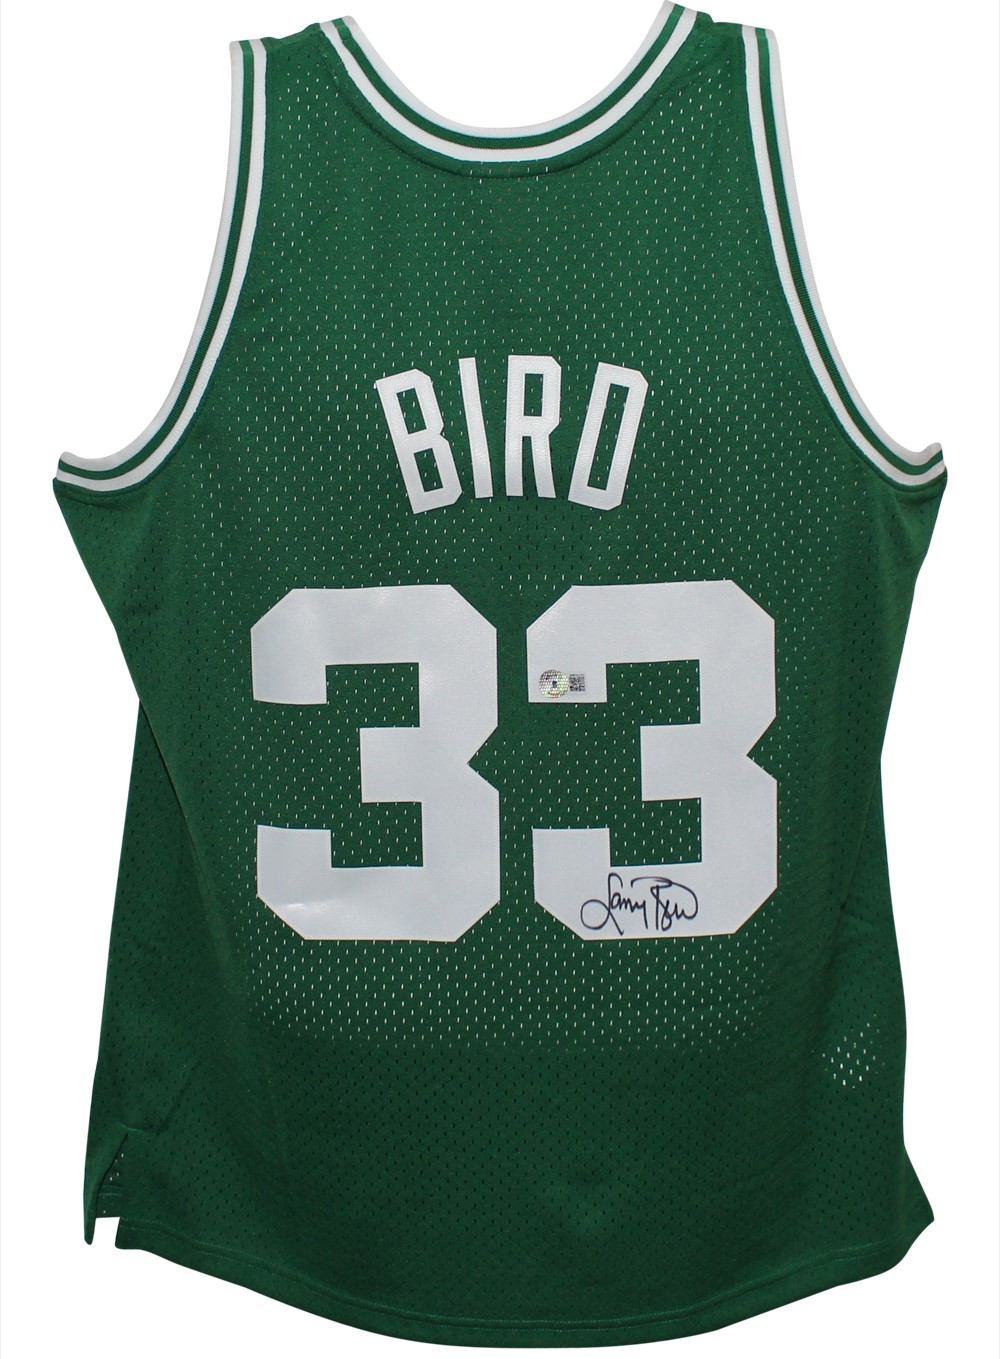 Larry Bird Autographed Official NBA White Celtics Basketball